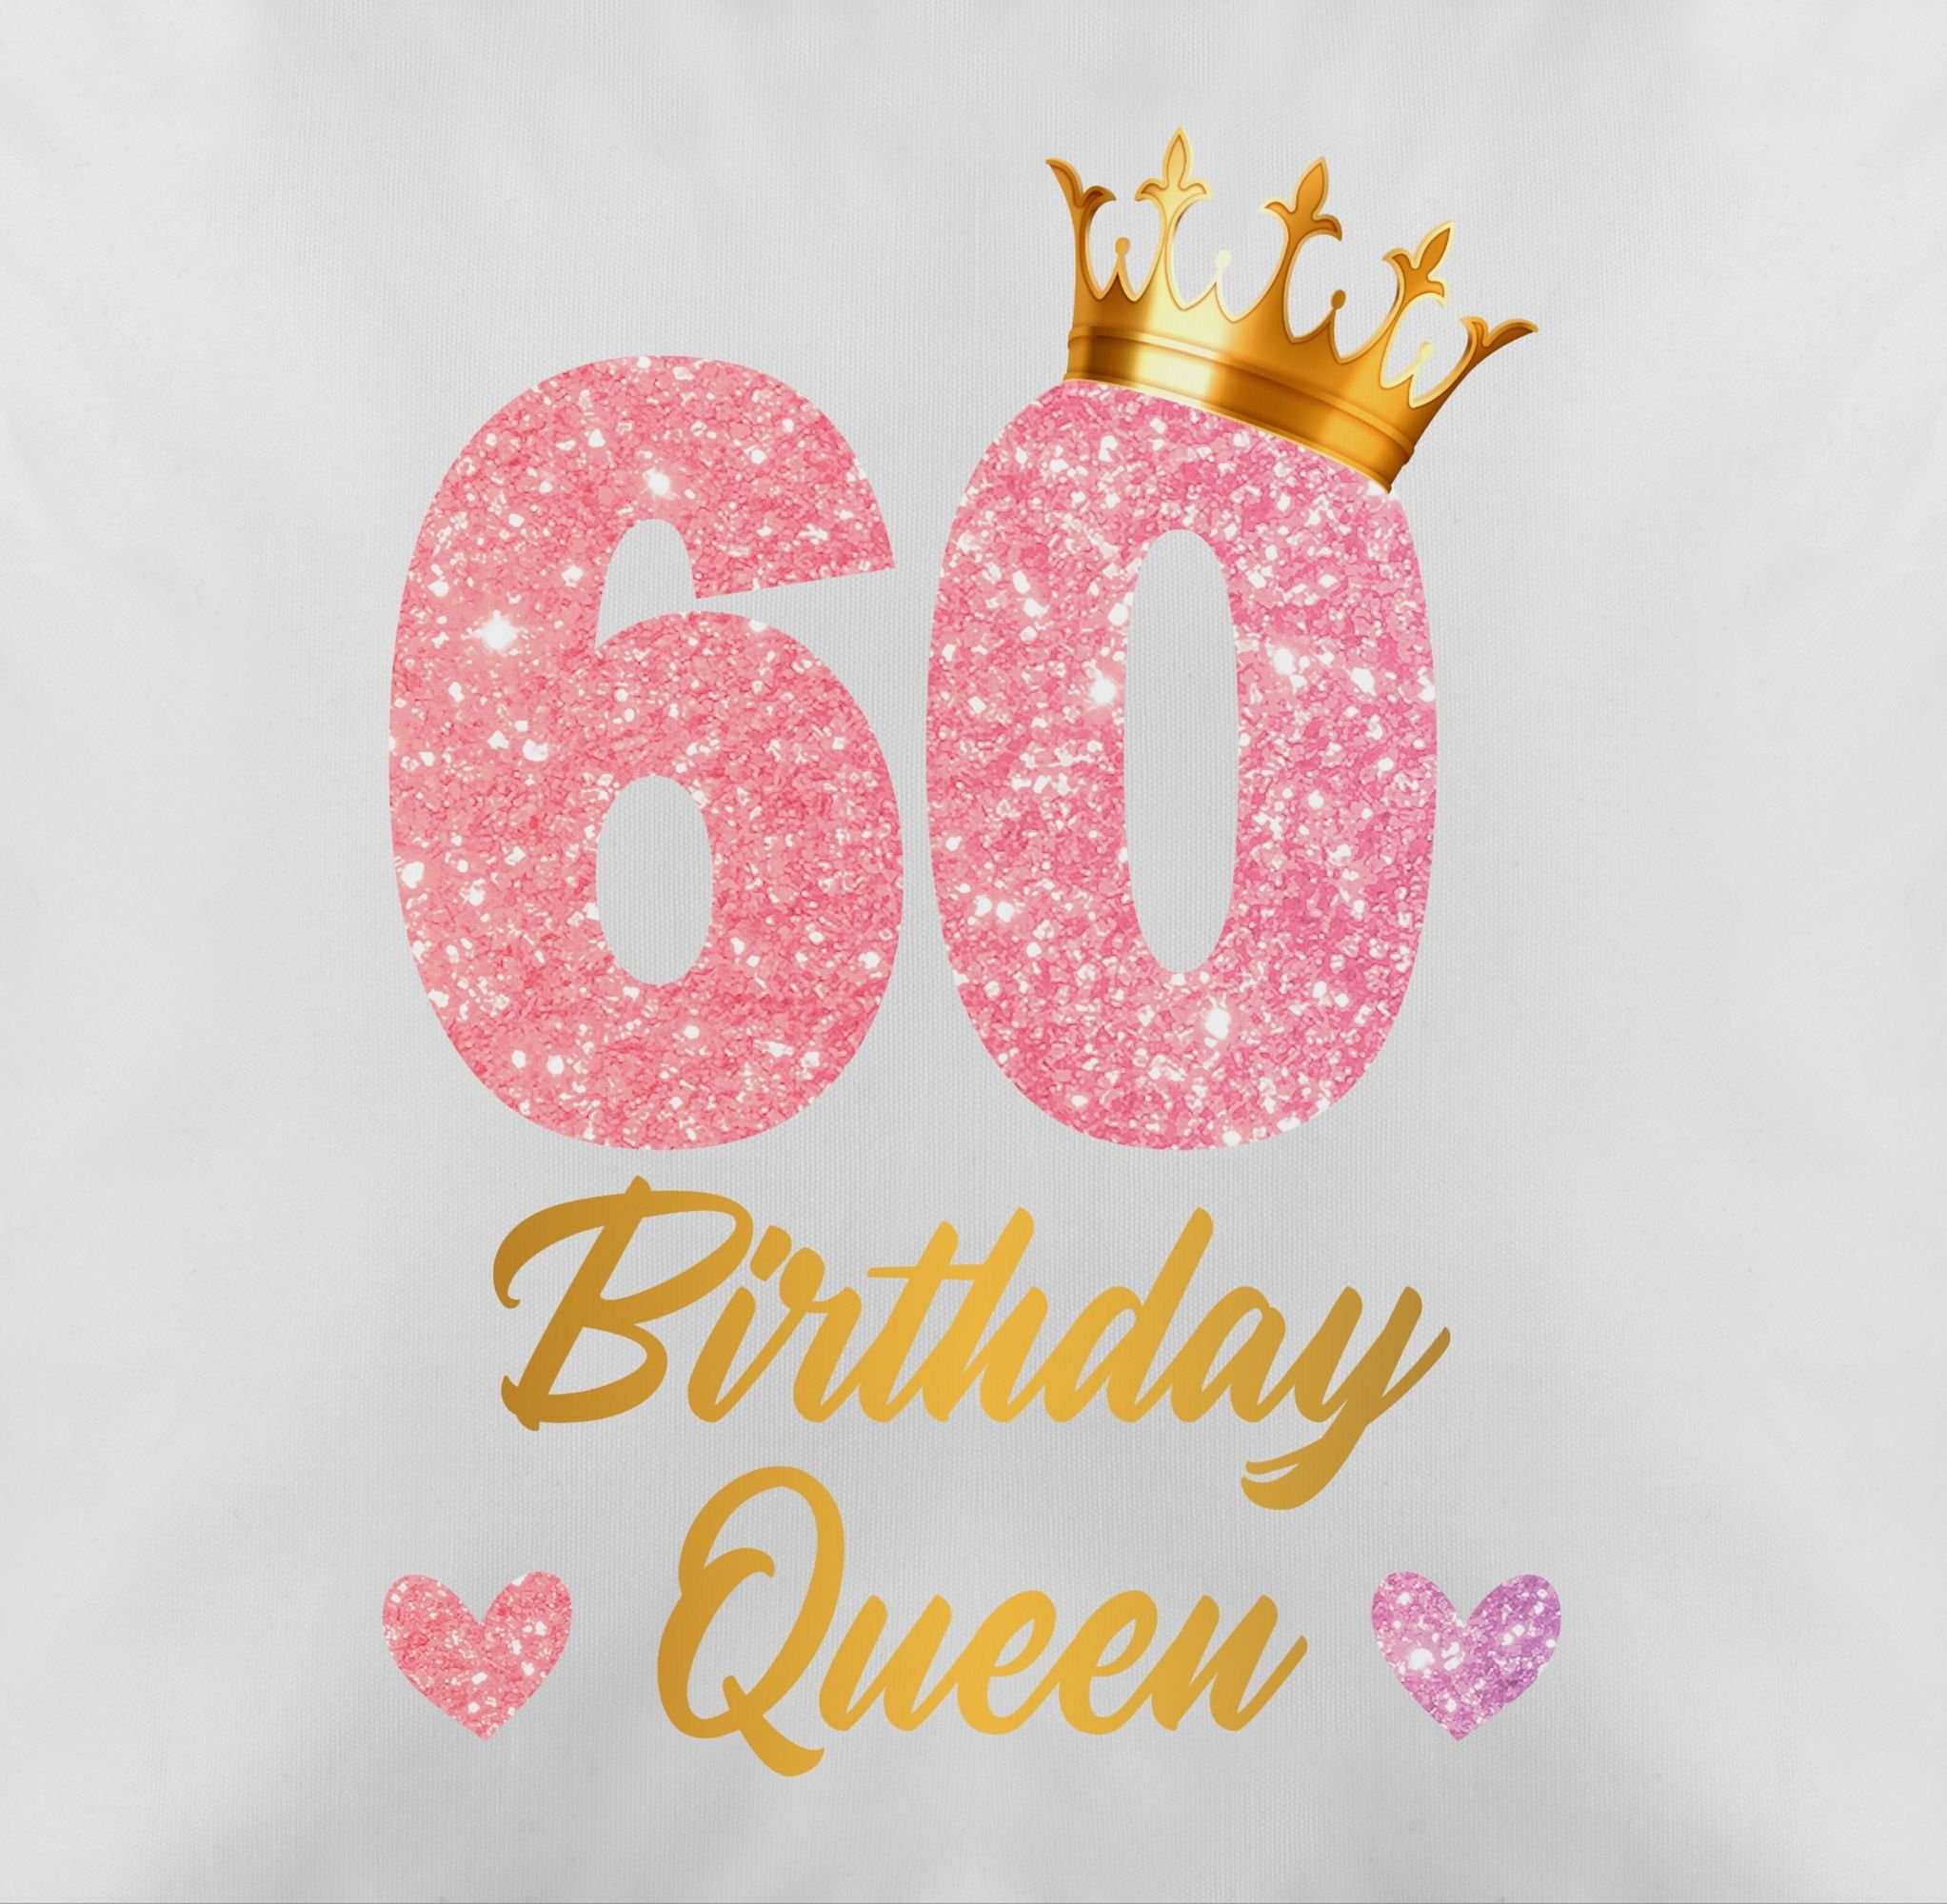 Birthday 3 60, Shirtracer Königin Geburtstagsgeschenk Geburtstag 60 Kissen Dekokissen Geburtstags Weiß Queen 60.